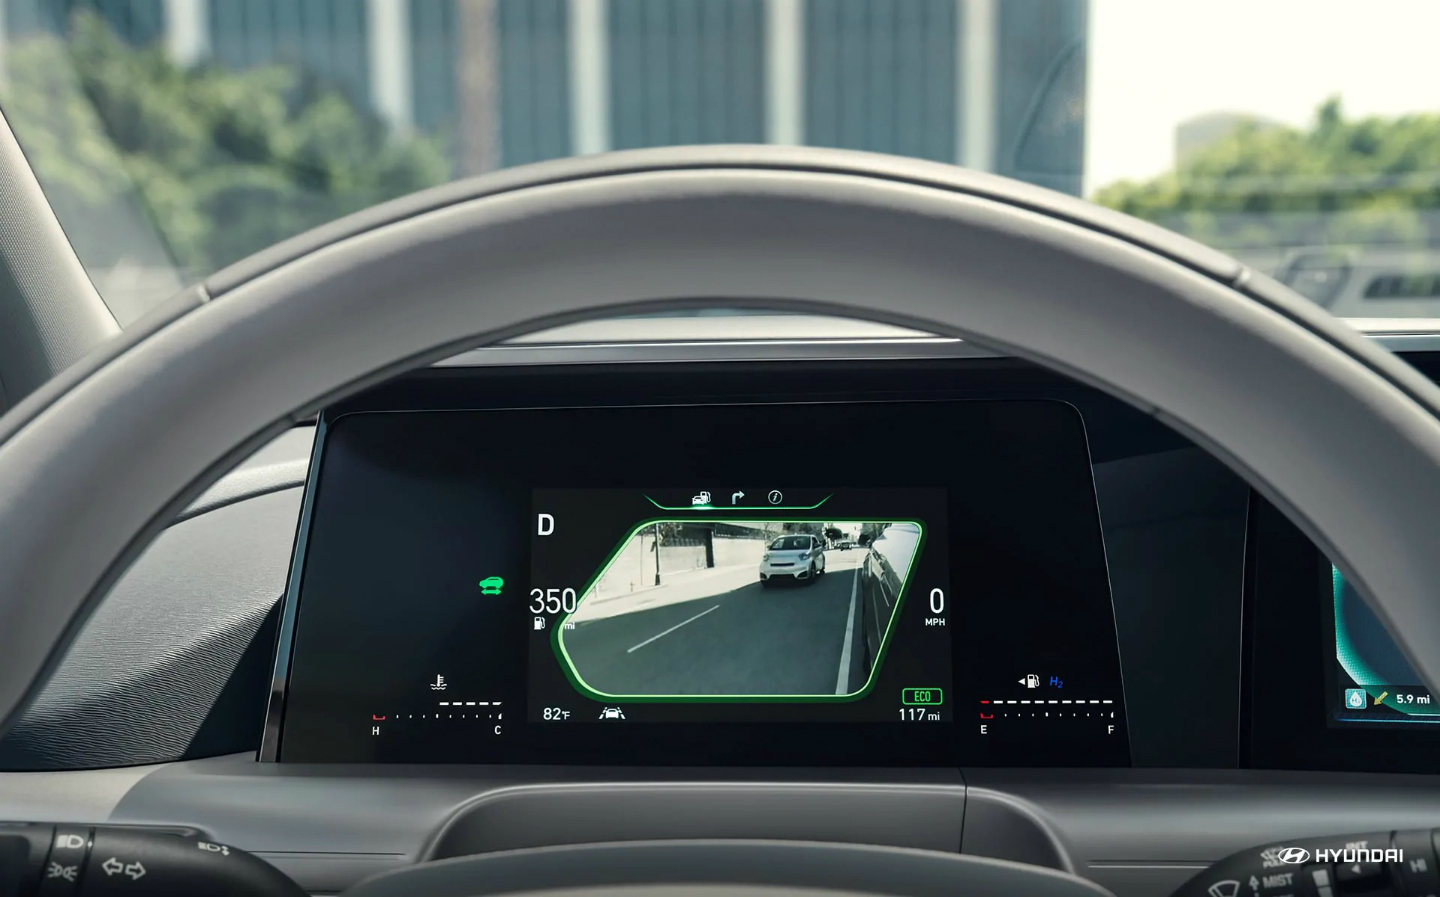 Sunday Times Motor Awards 2019 Best Innovation of the Year. Hyundai NEXO Blind Spot View Monitor